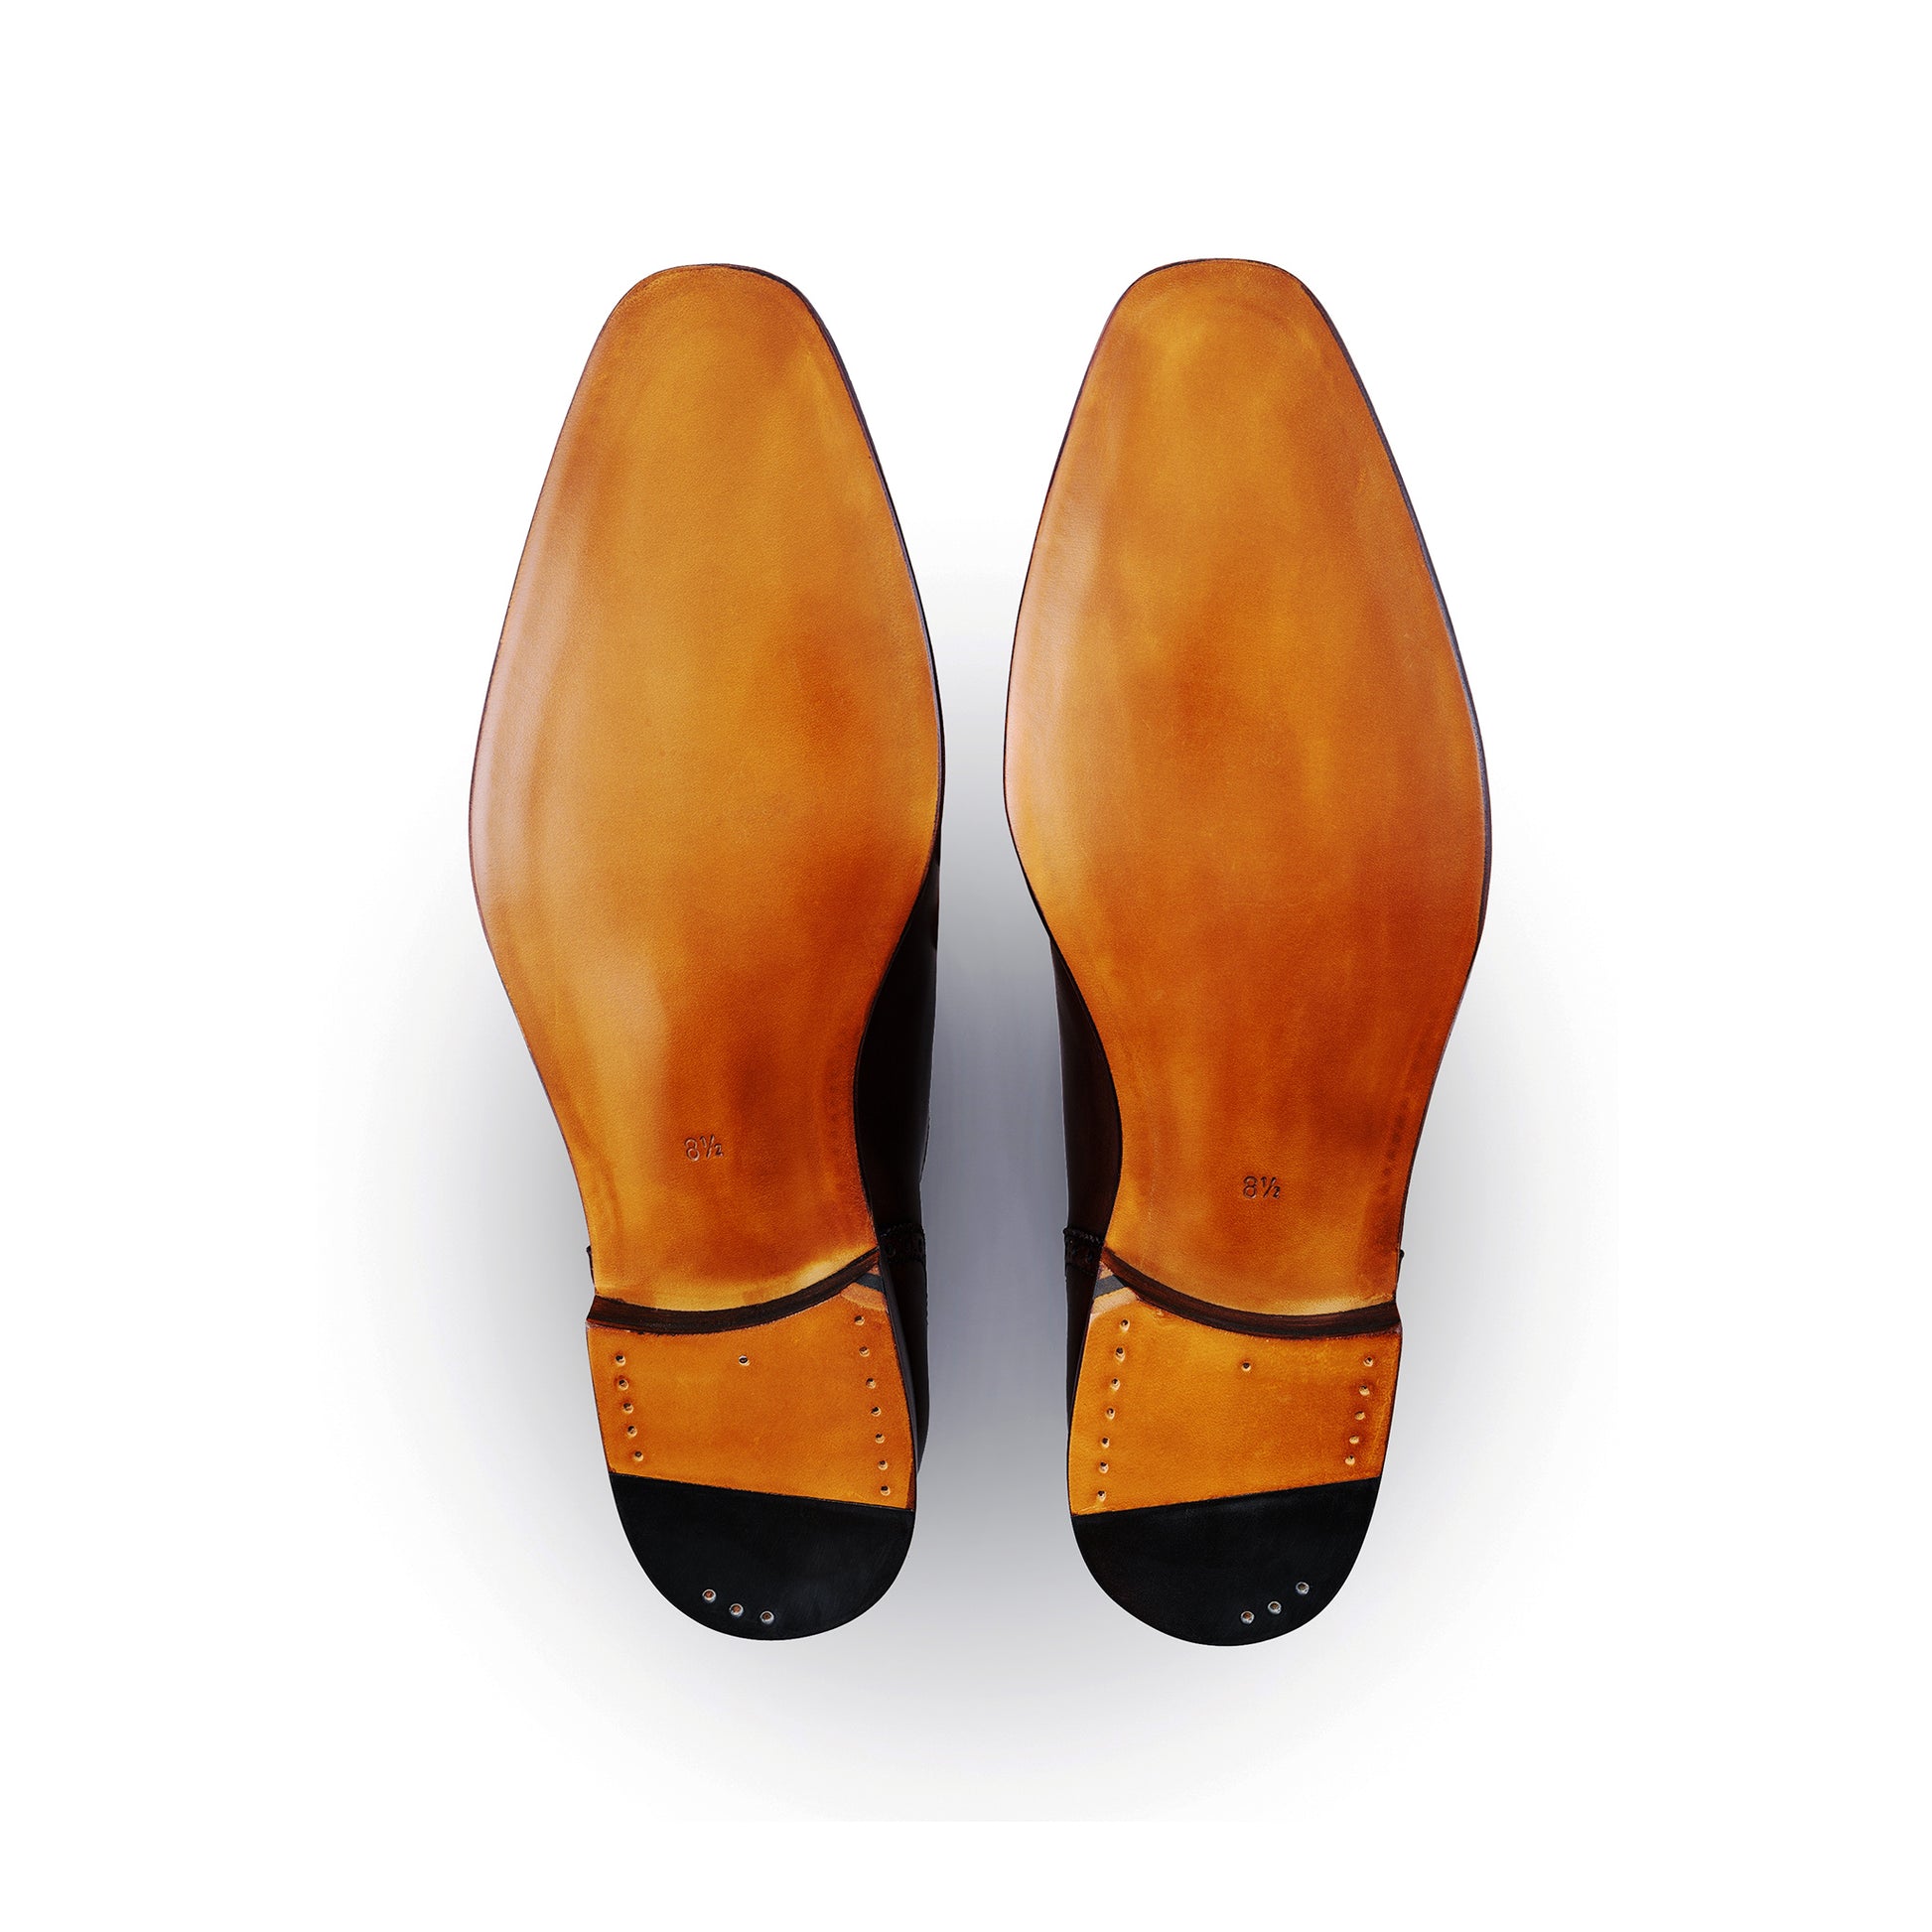 TLB Mallorca leather shoes 501 / ALAN / BOXCALF BLACK